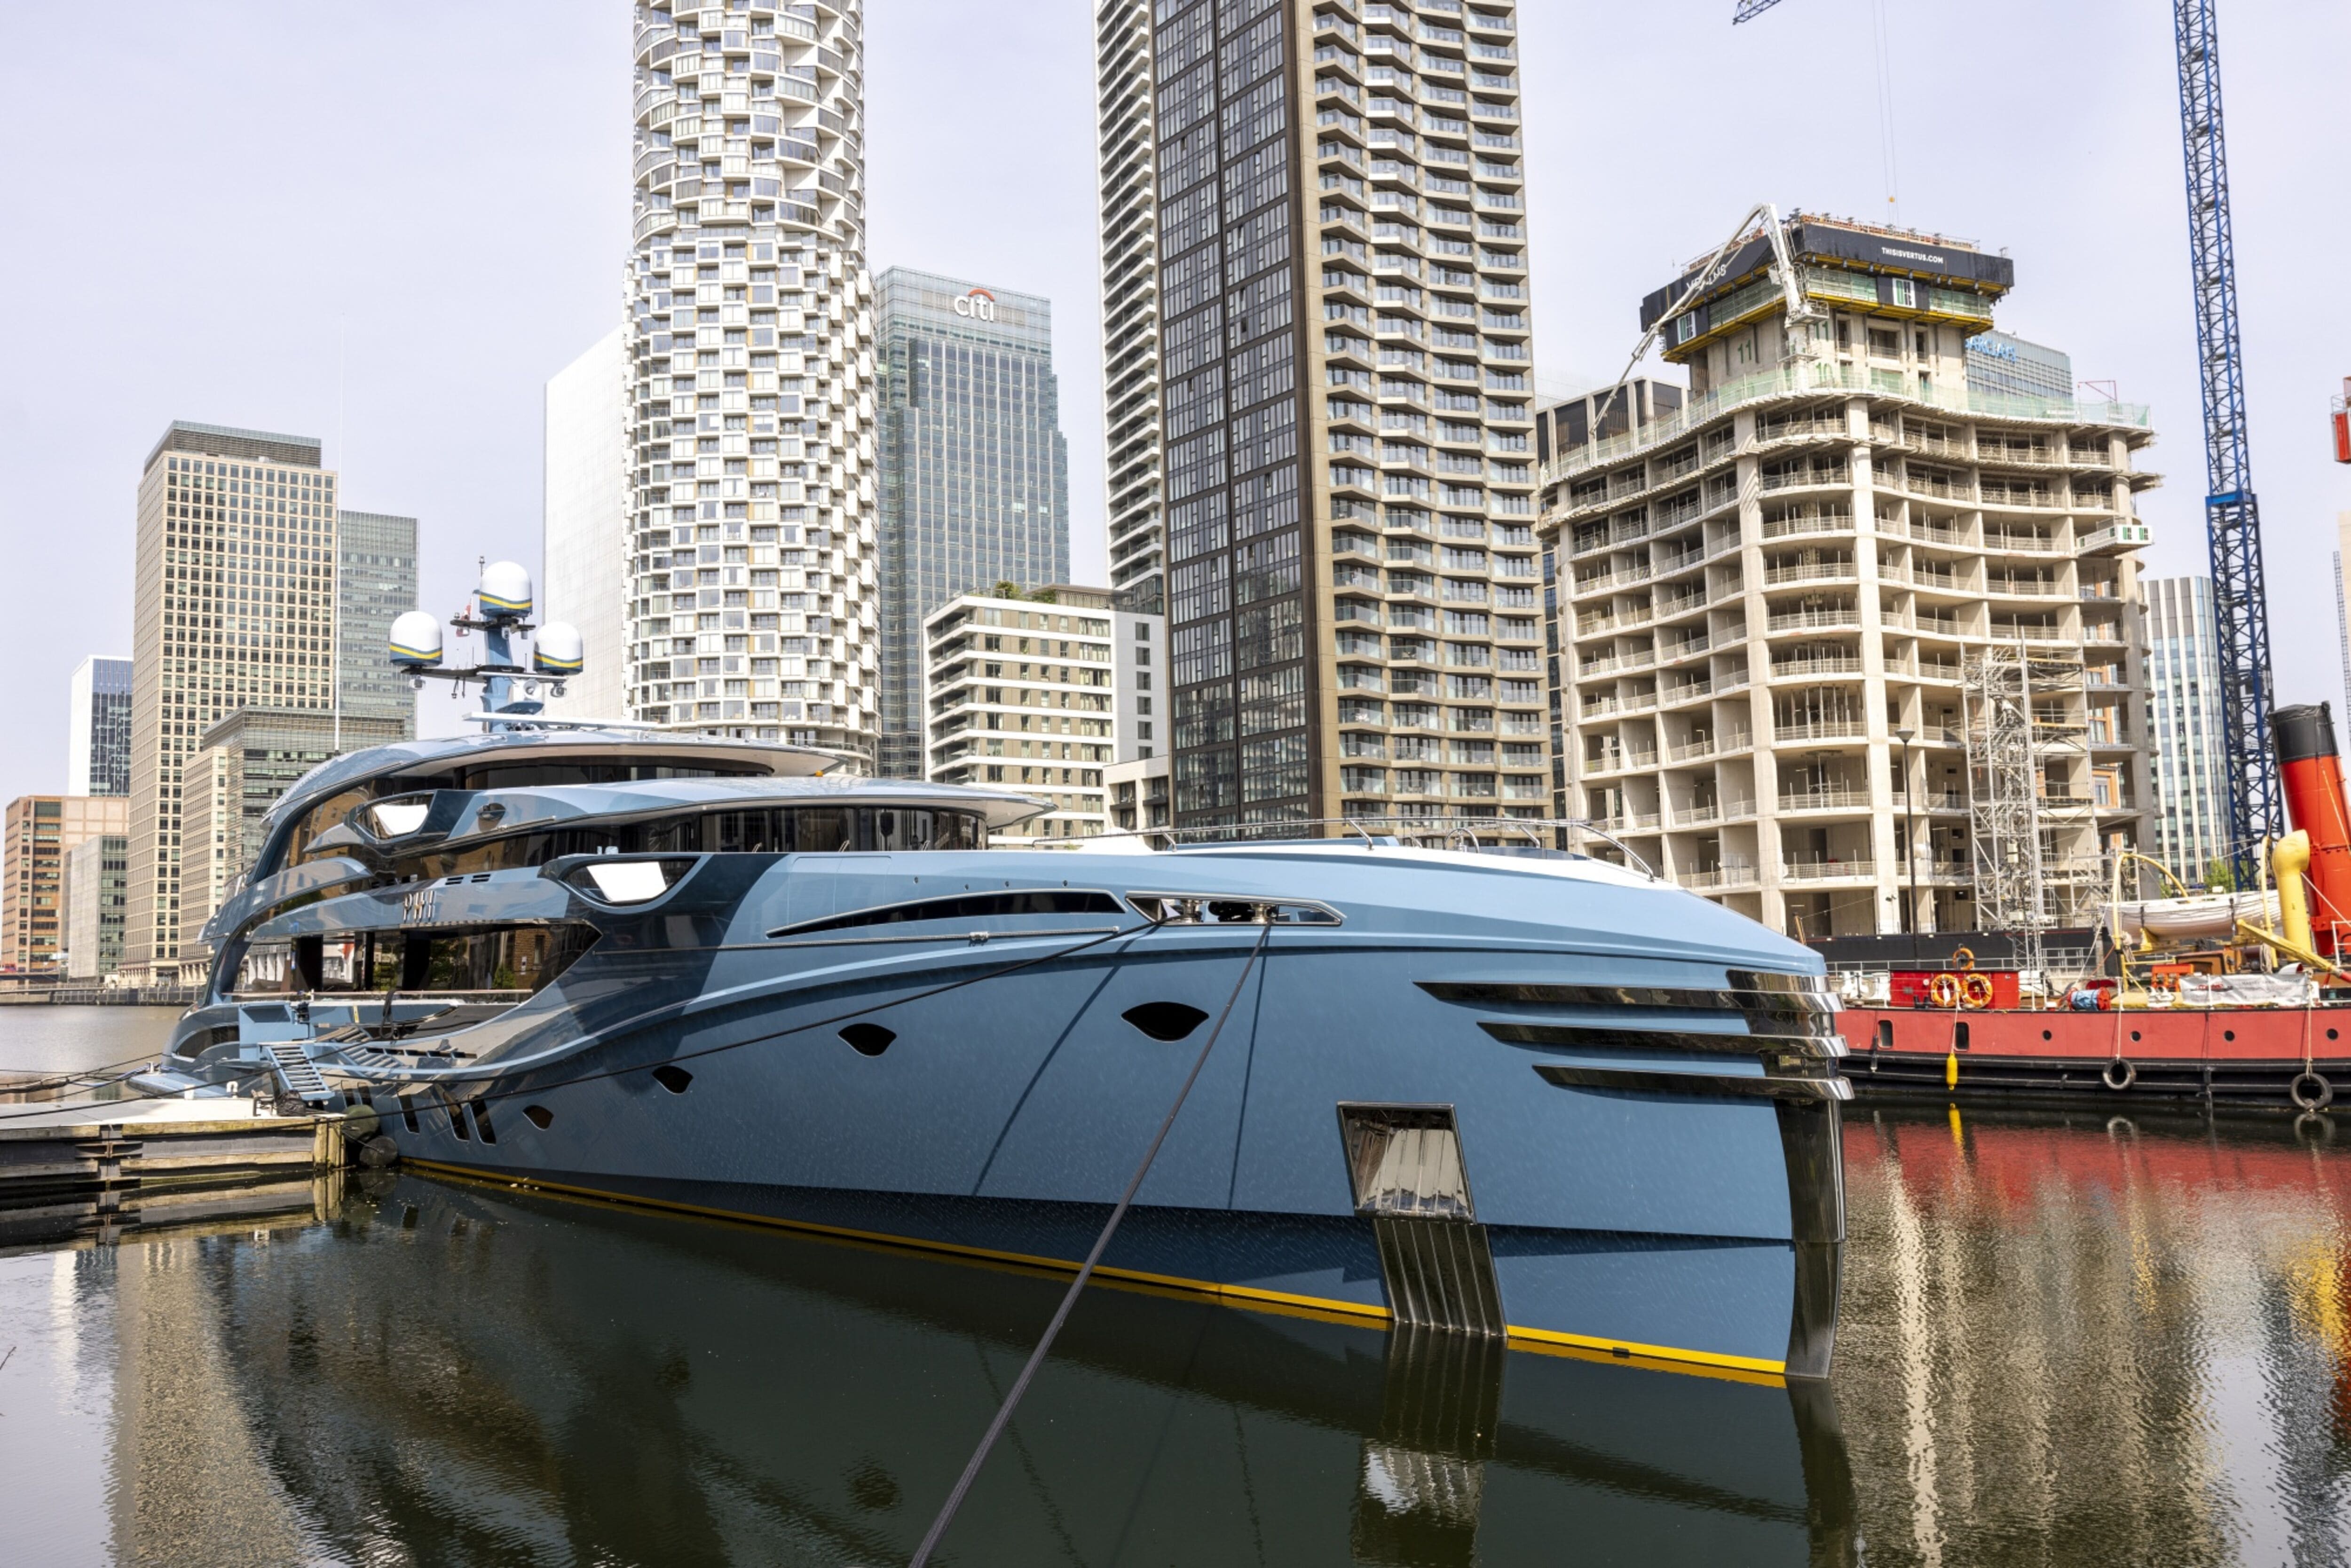 Russian president sues UK over $50 yacht seizure